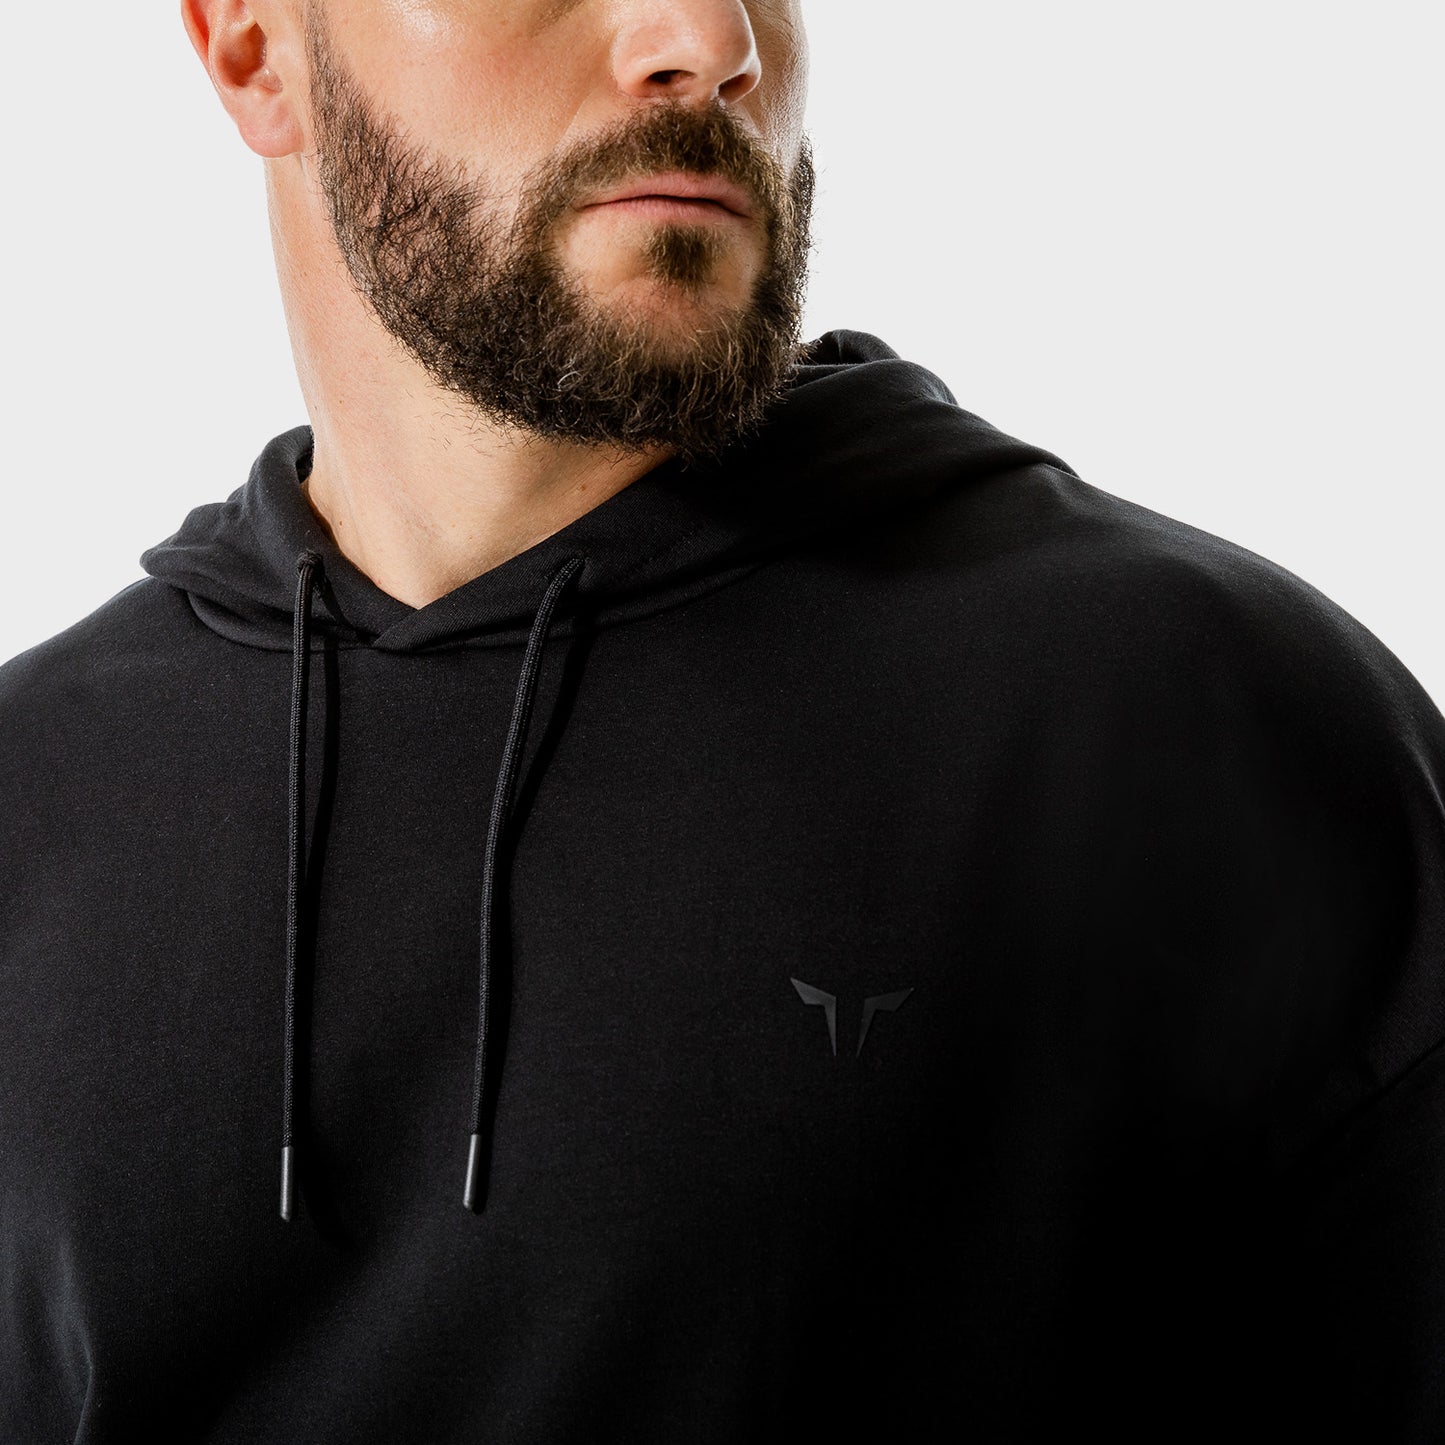 squatwolf-gym-wear-lab-360-hoodie-black-workout-hoodies-for-men